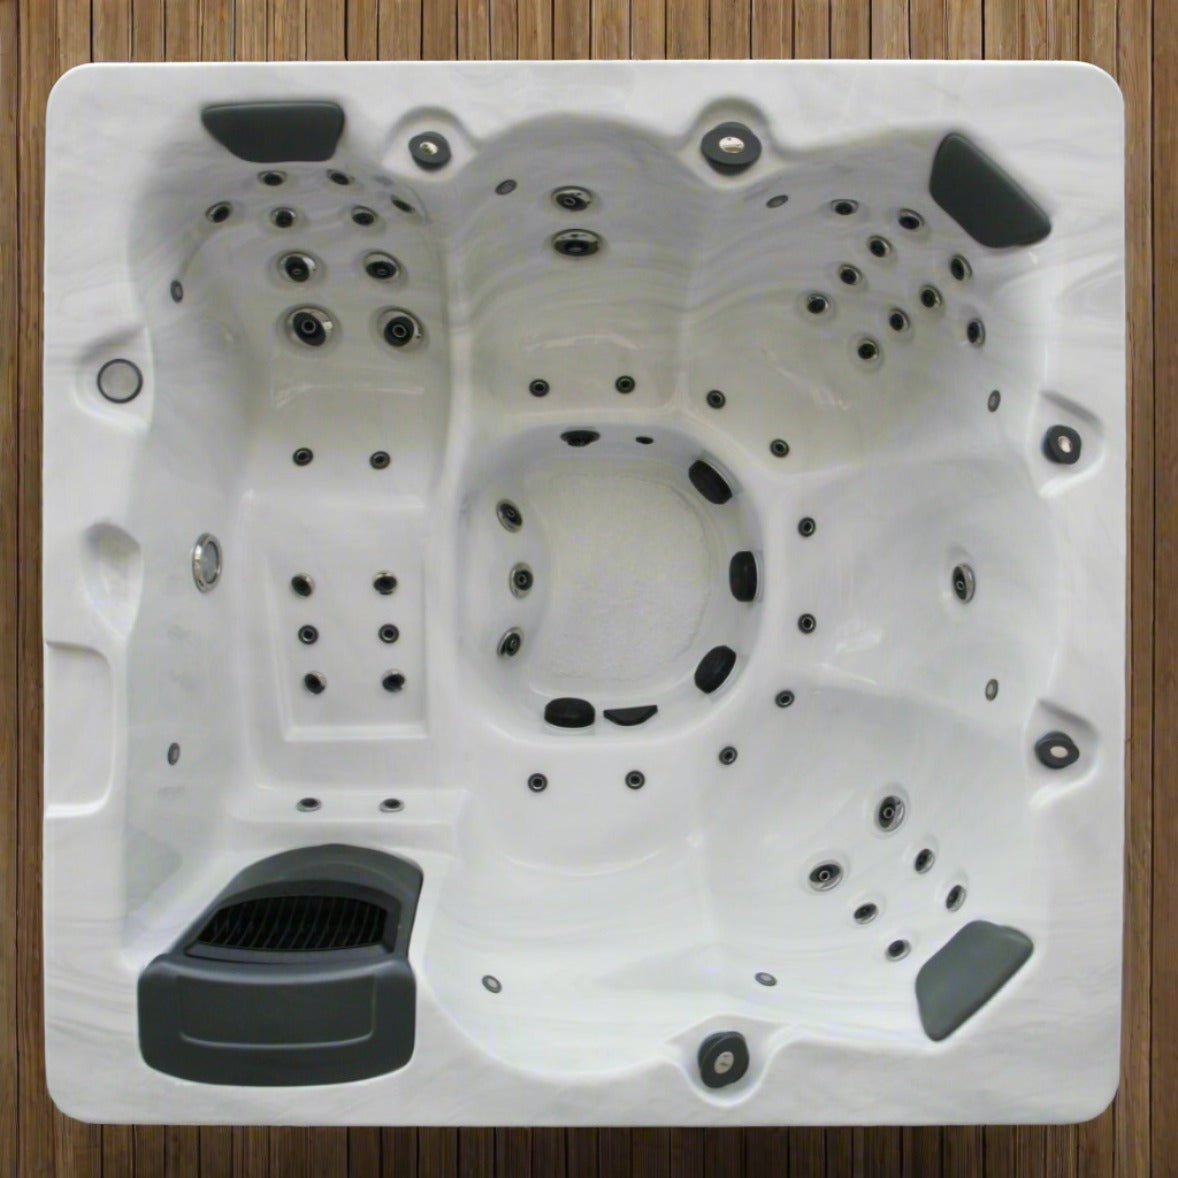 Milano II (13A Plug & Play) hot tub by H2O Hot Tubs